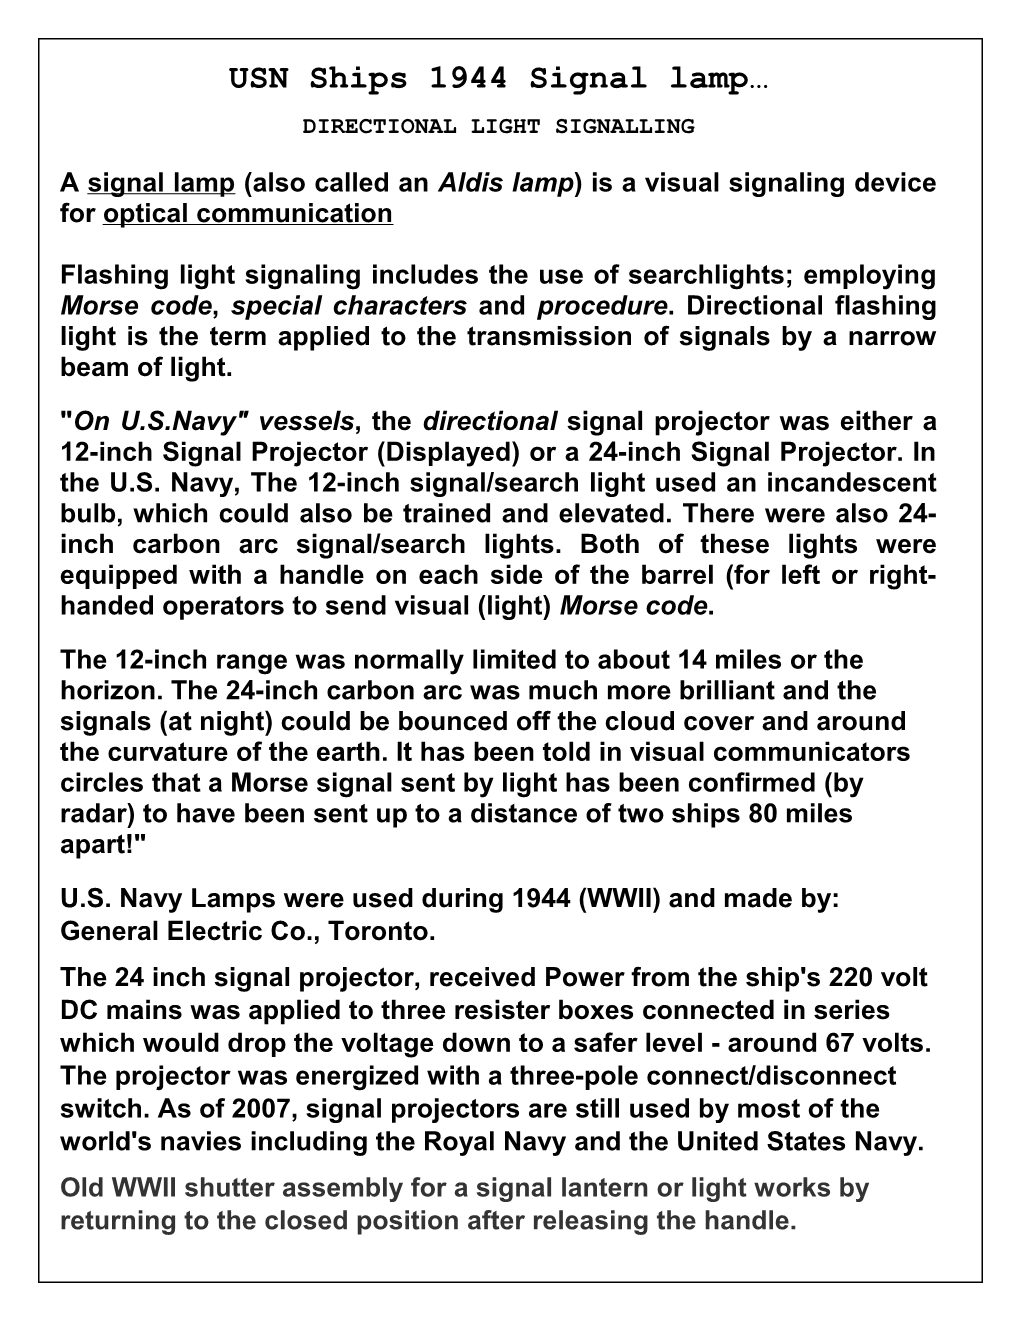 USN Ships 1944 Signal Lamp IWM Info Display